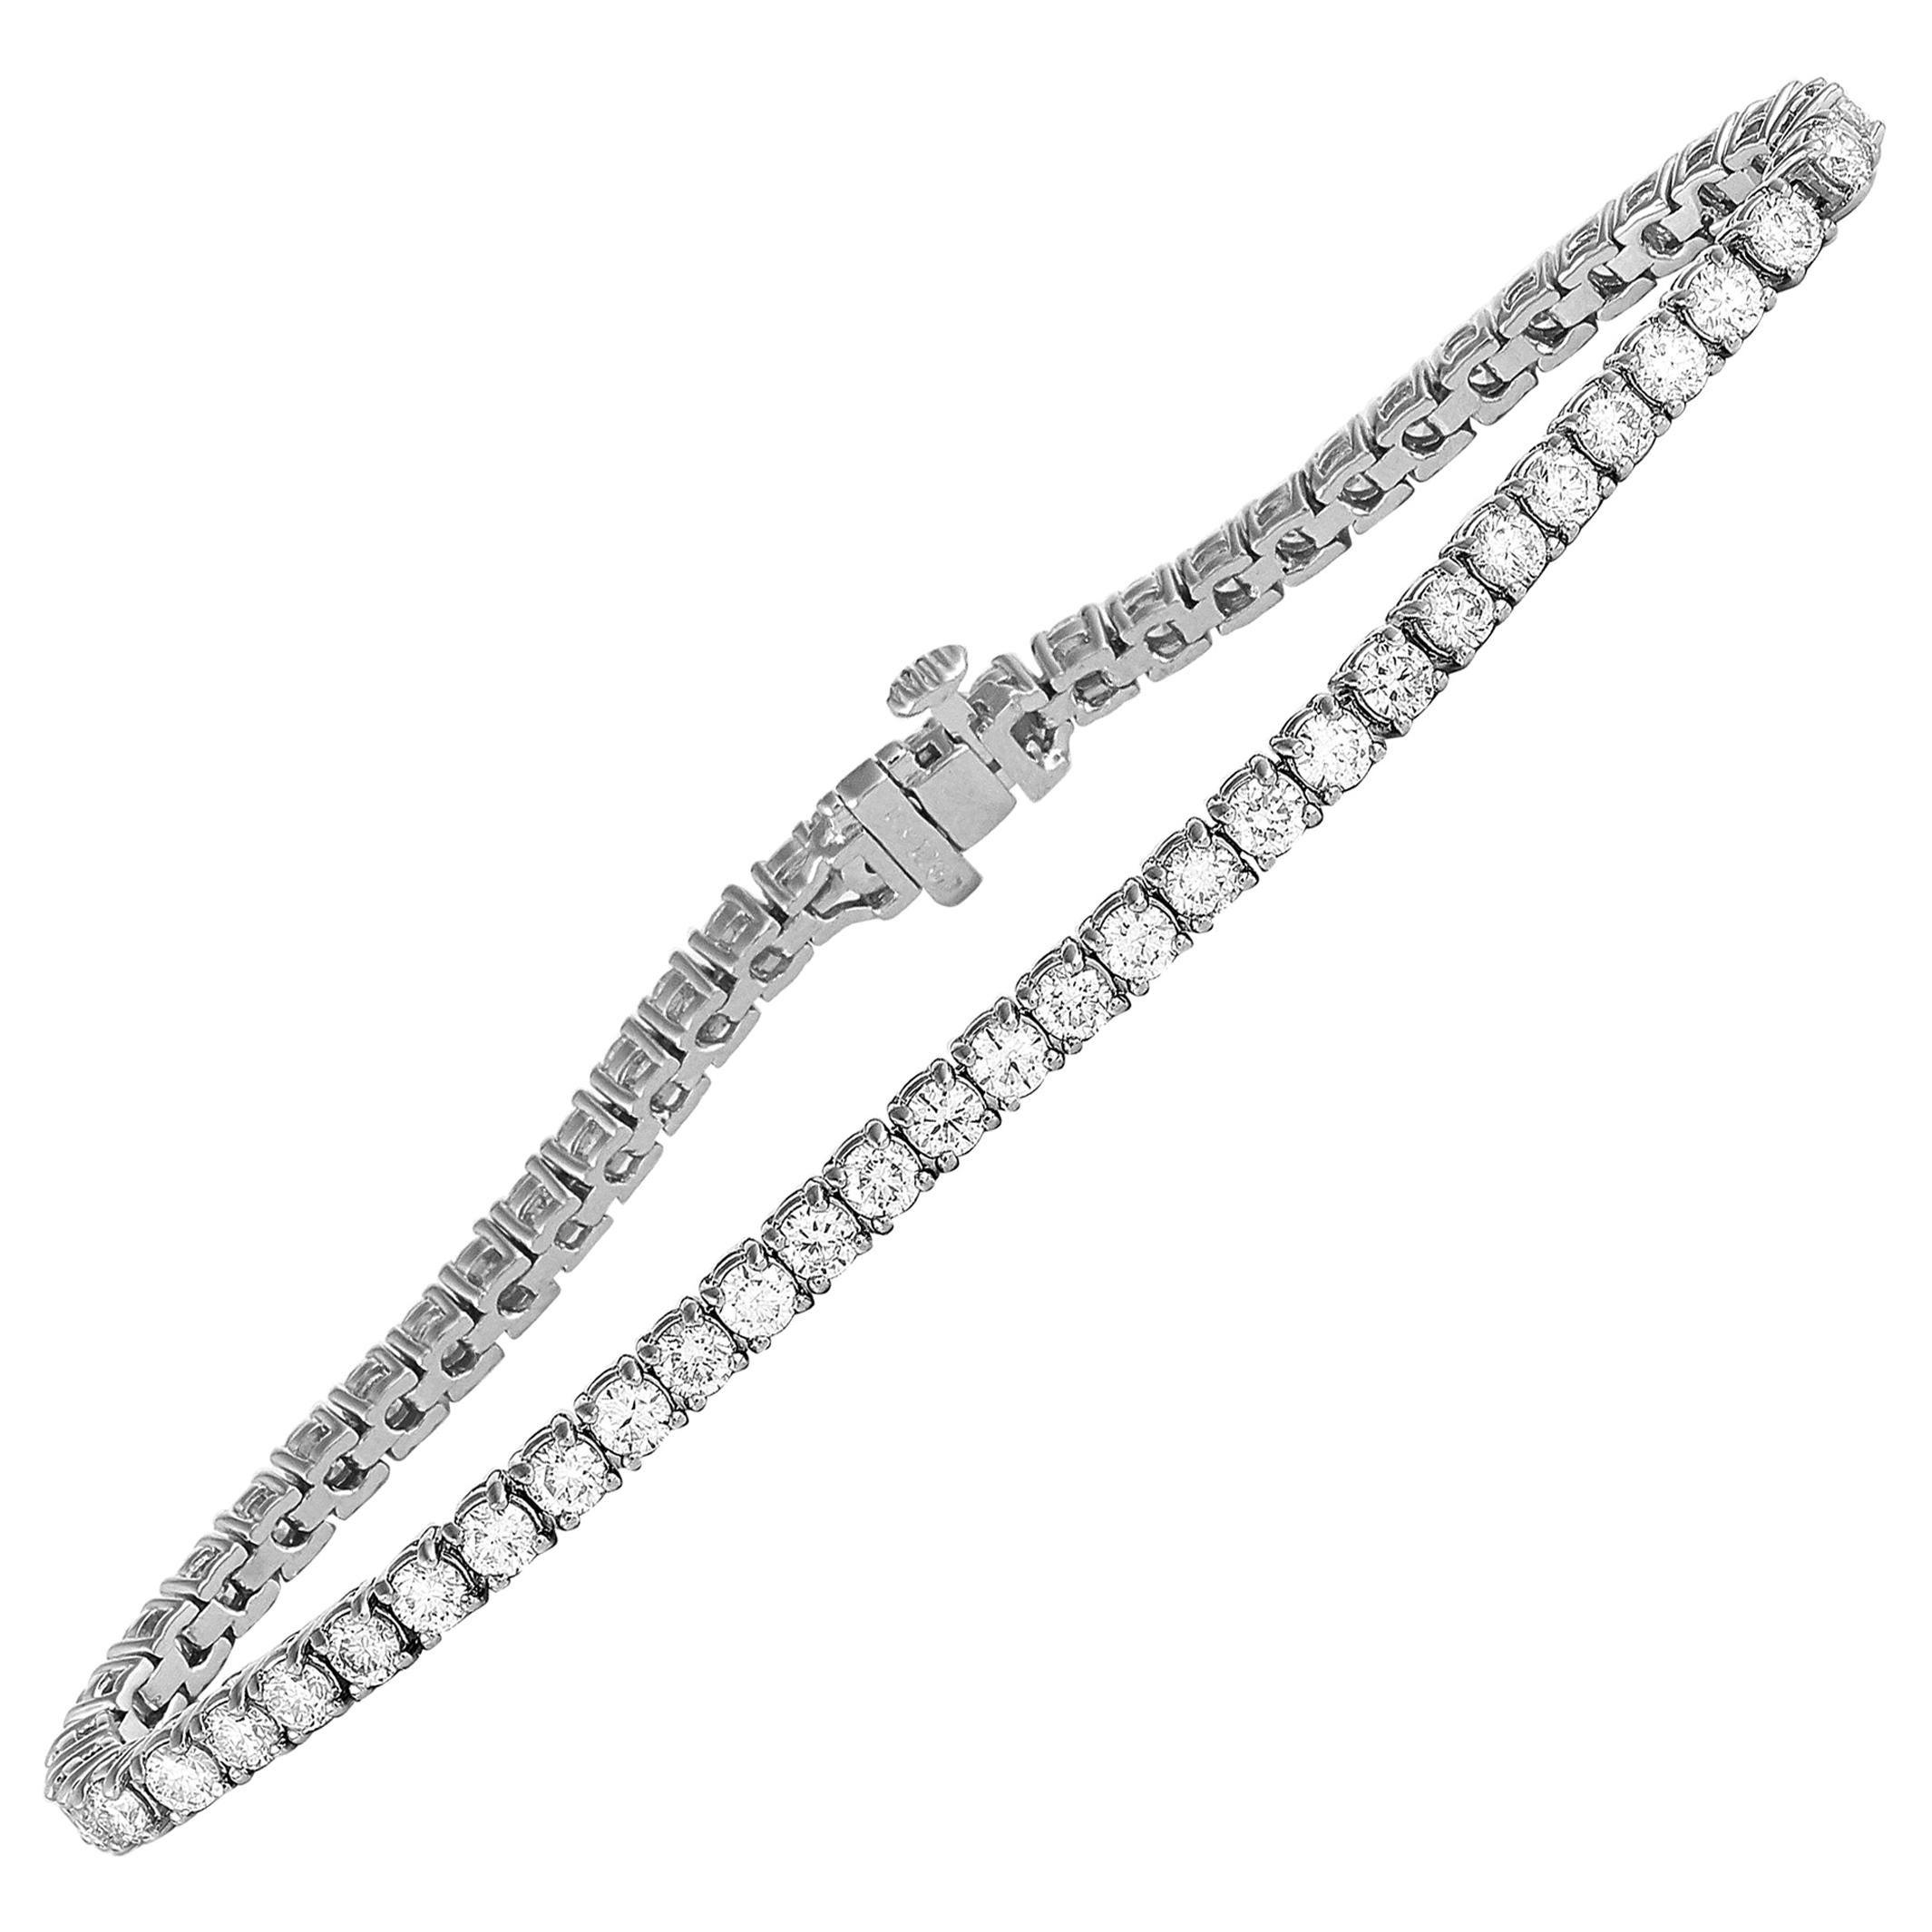 LB Exclusive 18 Karat White Gold 5.25 Carat Diamond Tennis Bracelet